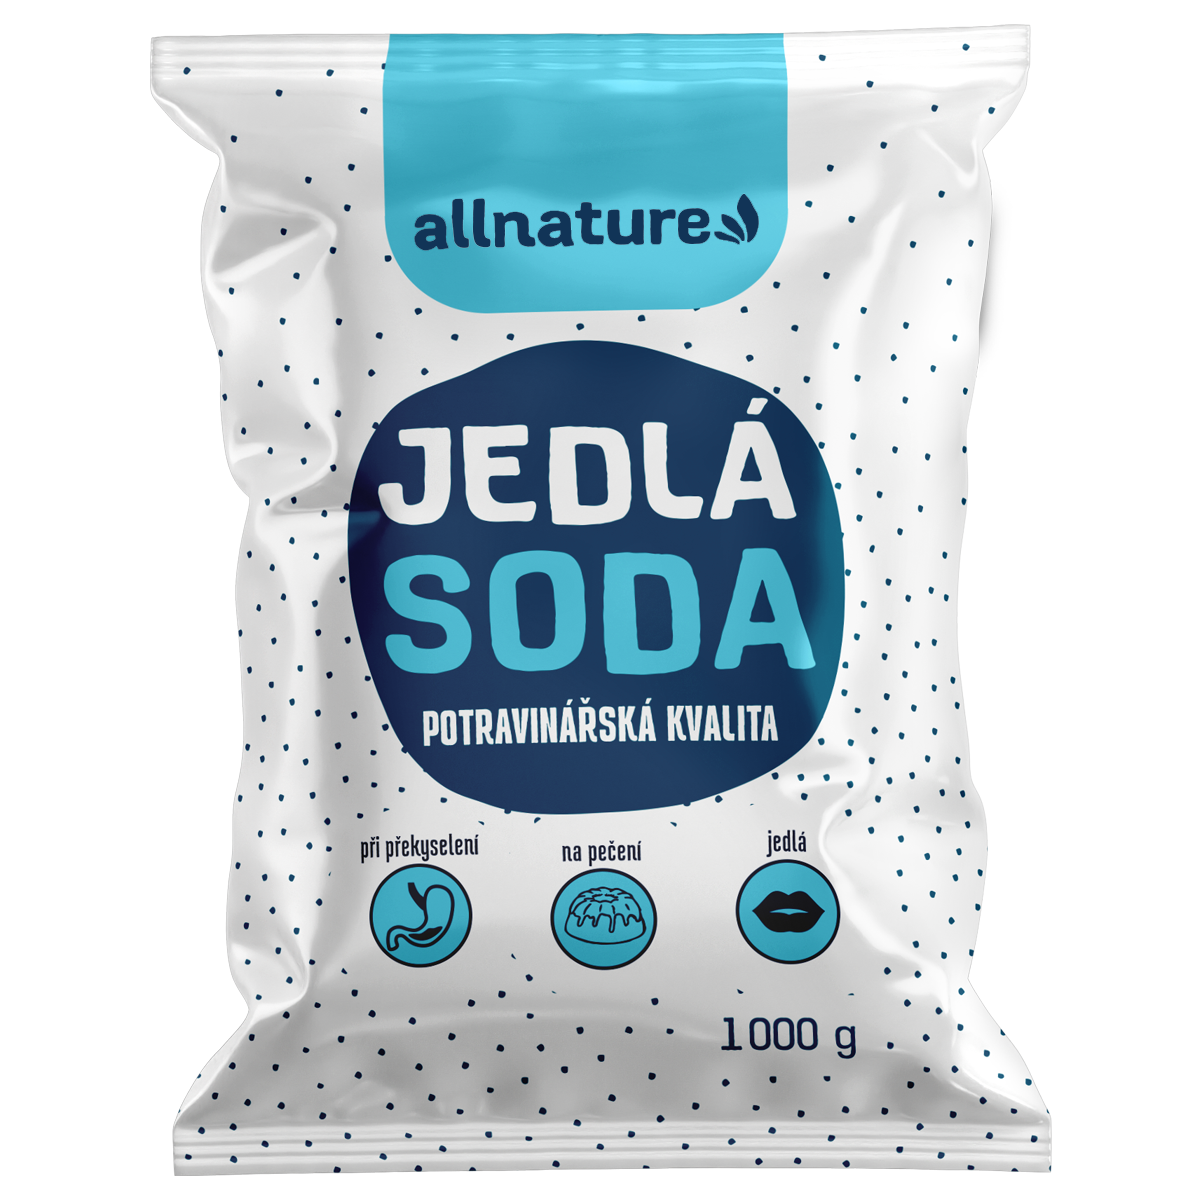 Allnature Jedlá soda (1 kg) - II. jakost - potravinářská kvalita Allnature